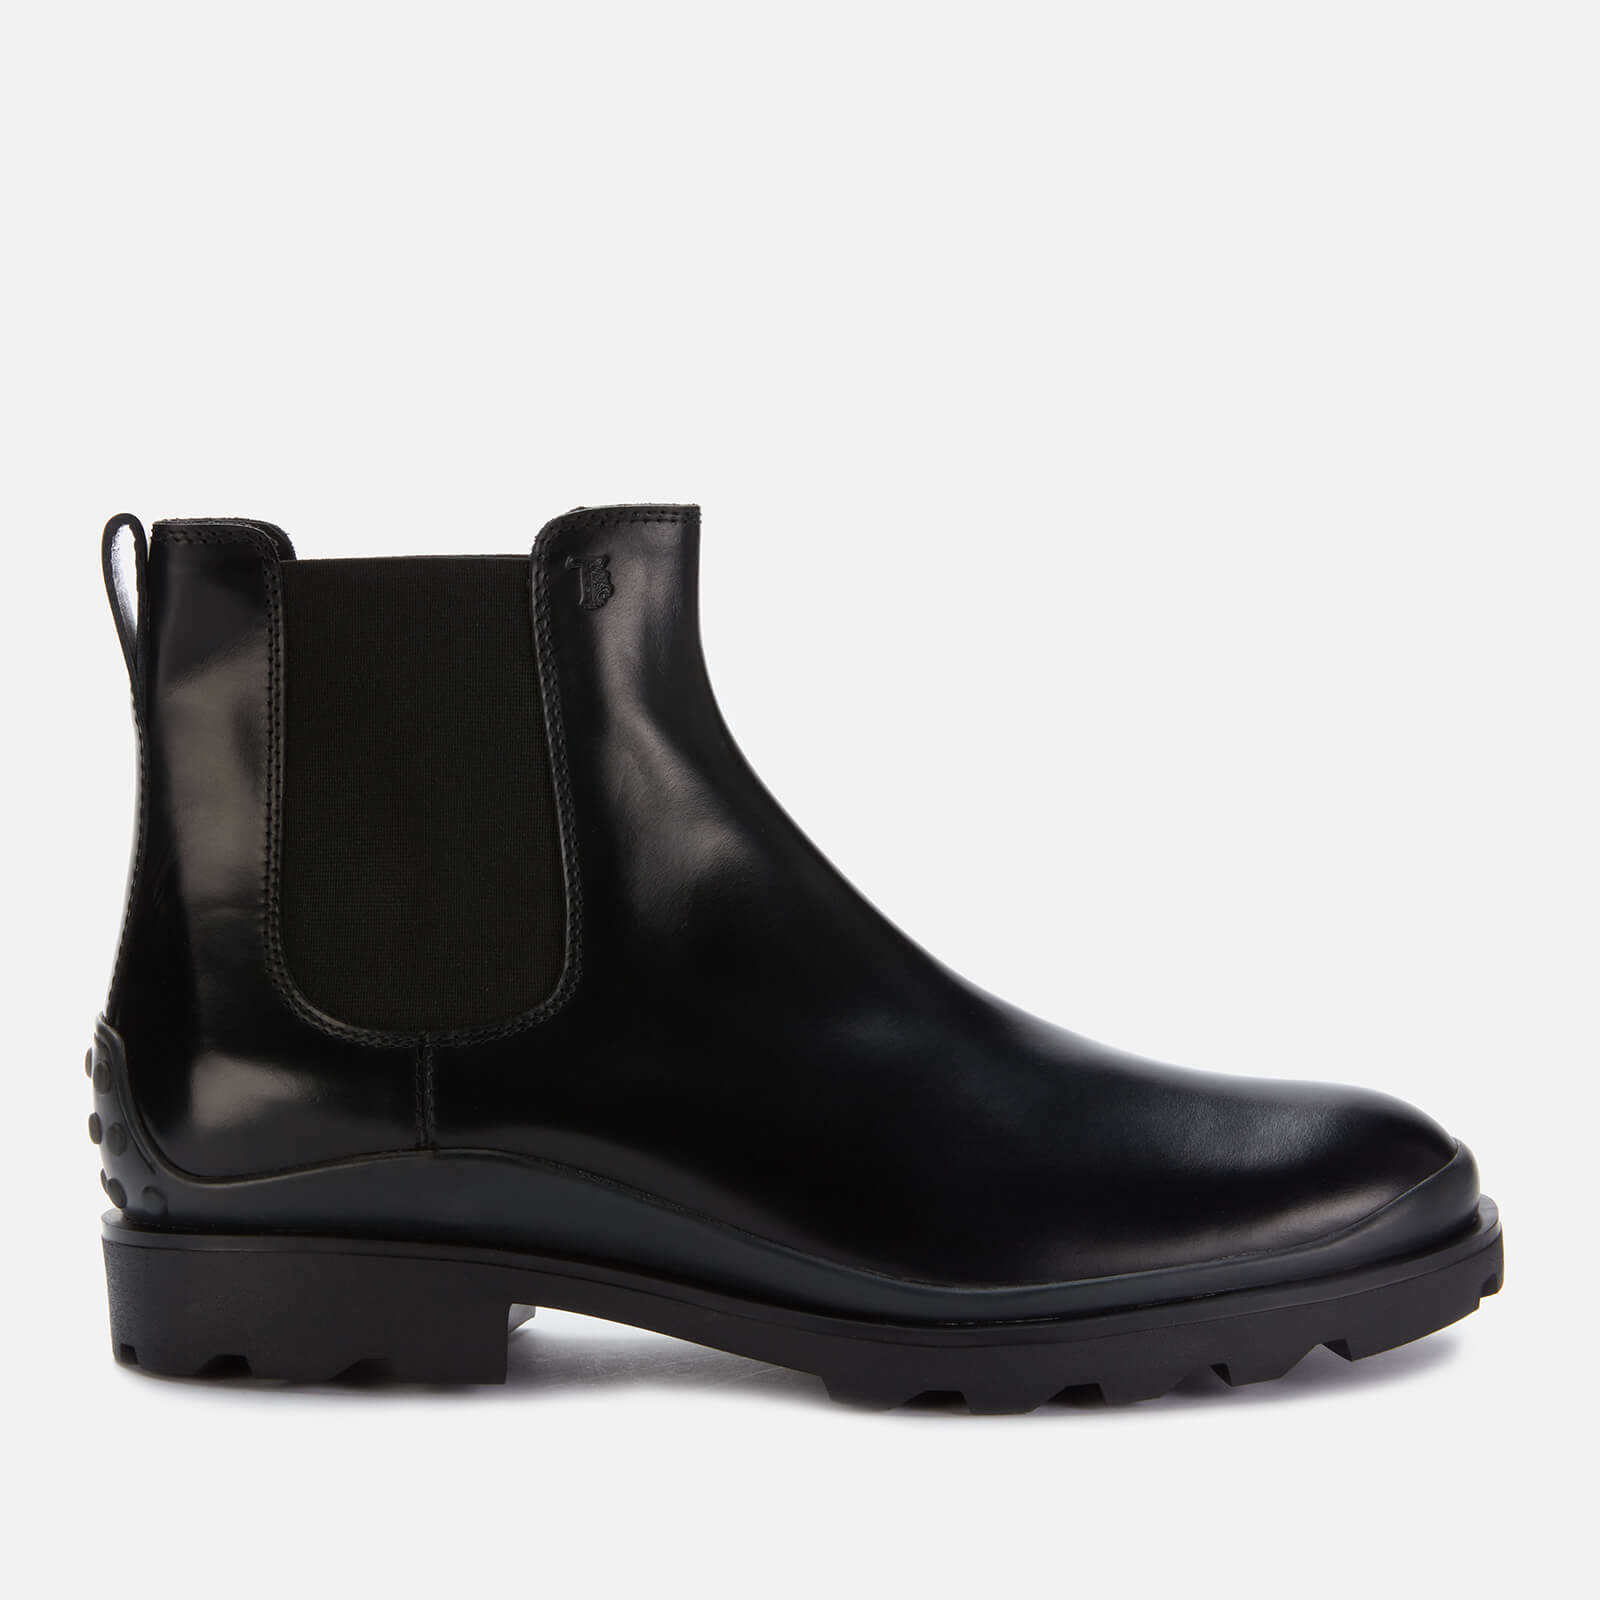 Tod's Men's Leather Chelsea Boots - Black - UK 7